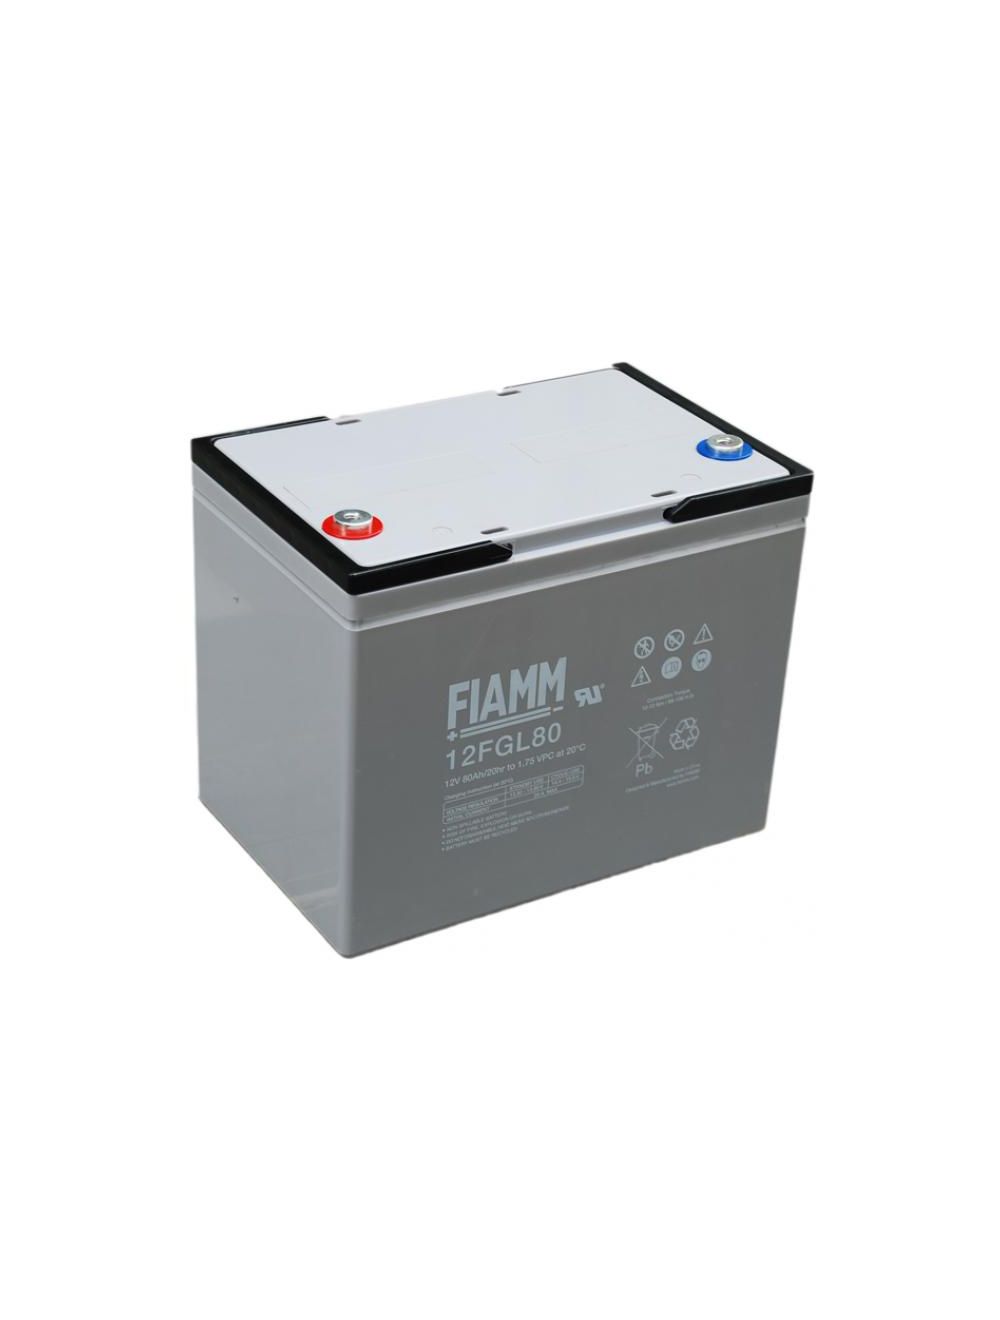 Batteria FIAMM AGM pannelli solari fotovoltaici 80Ah [12FGL80]